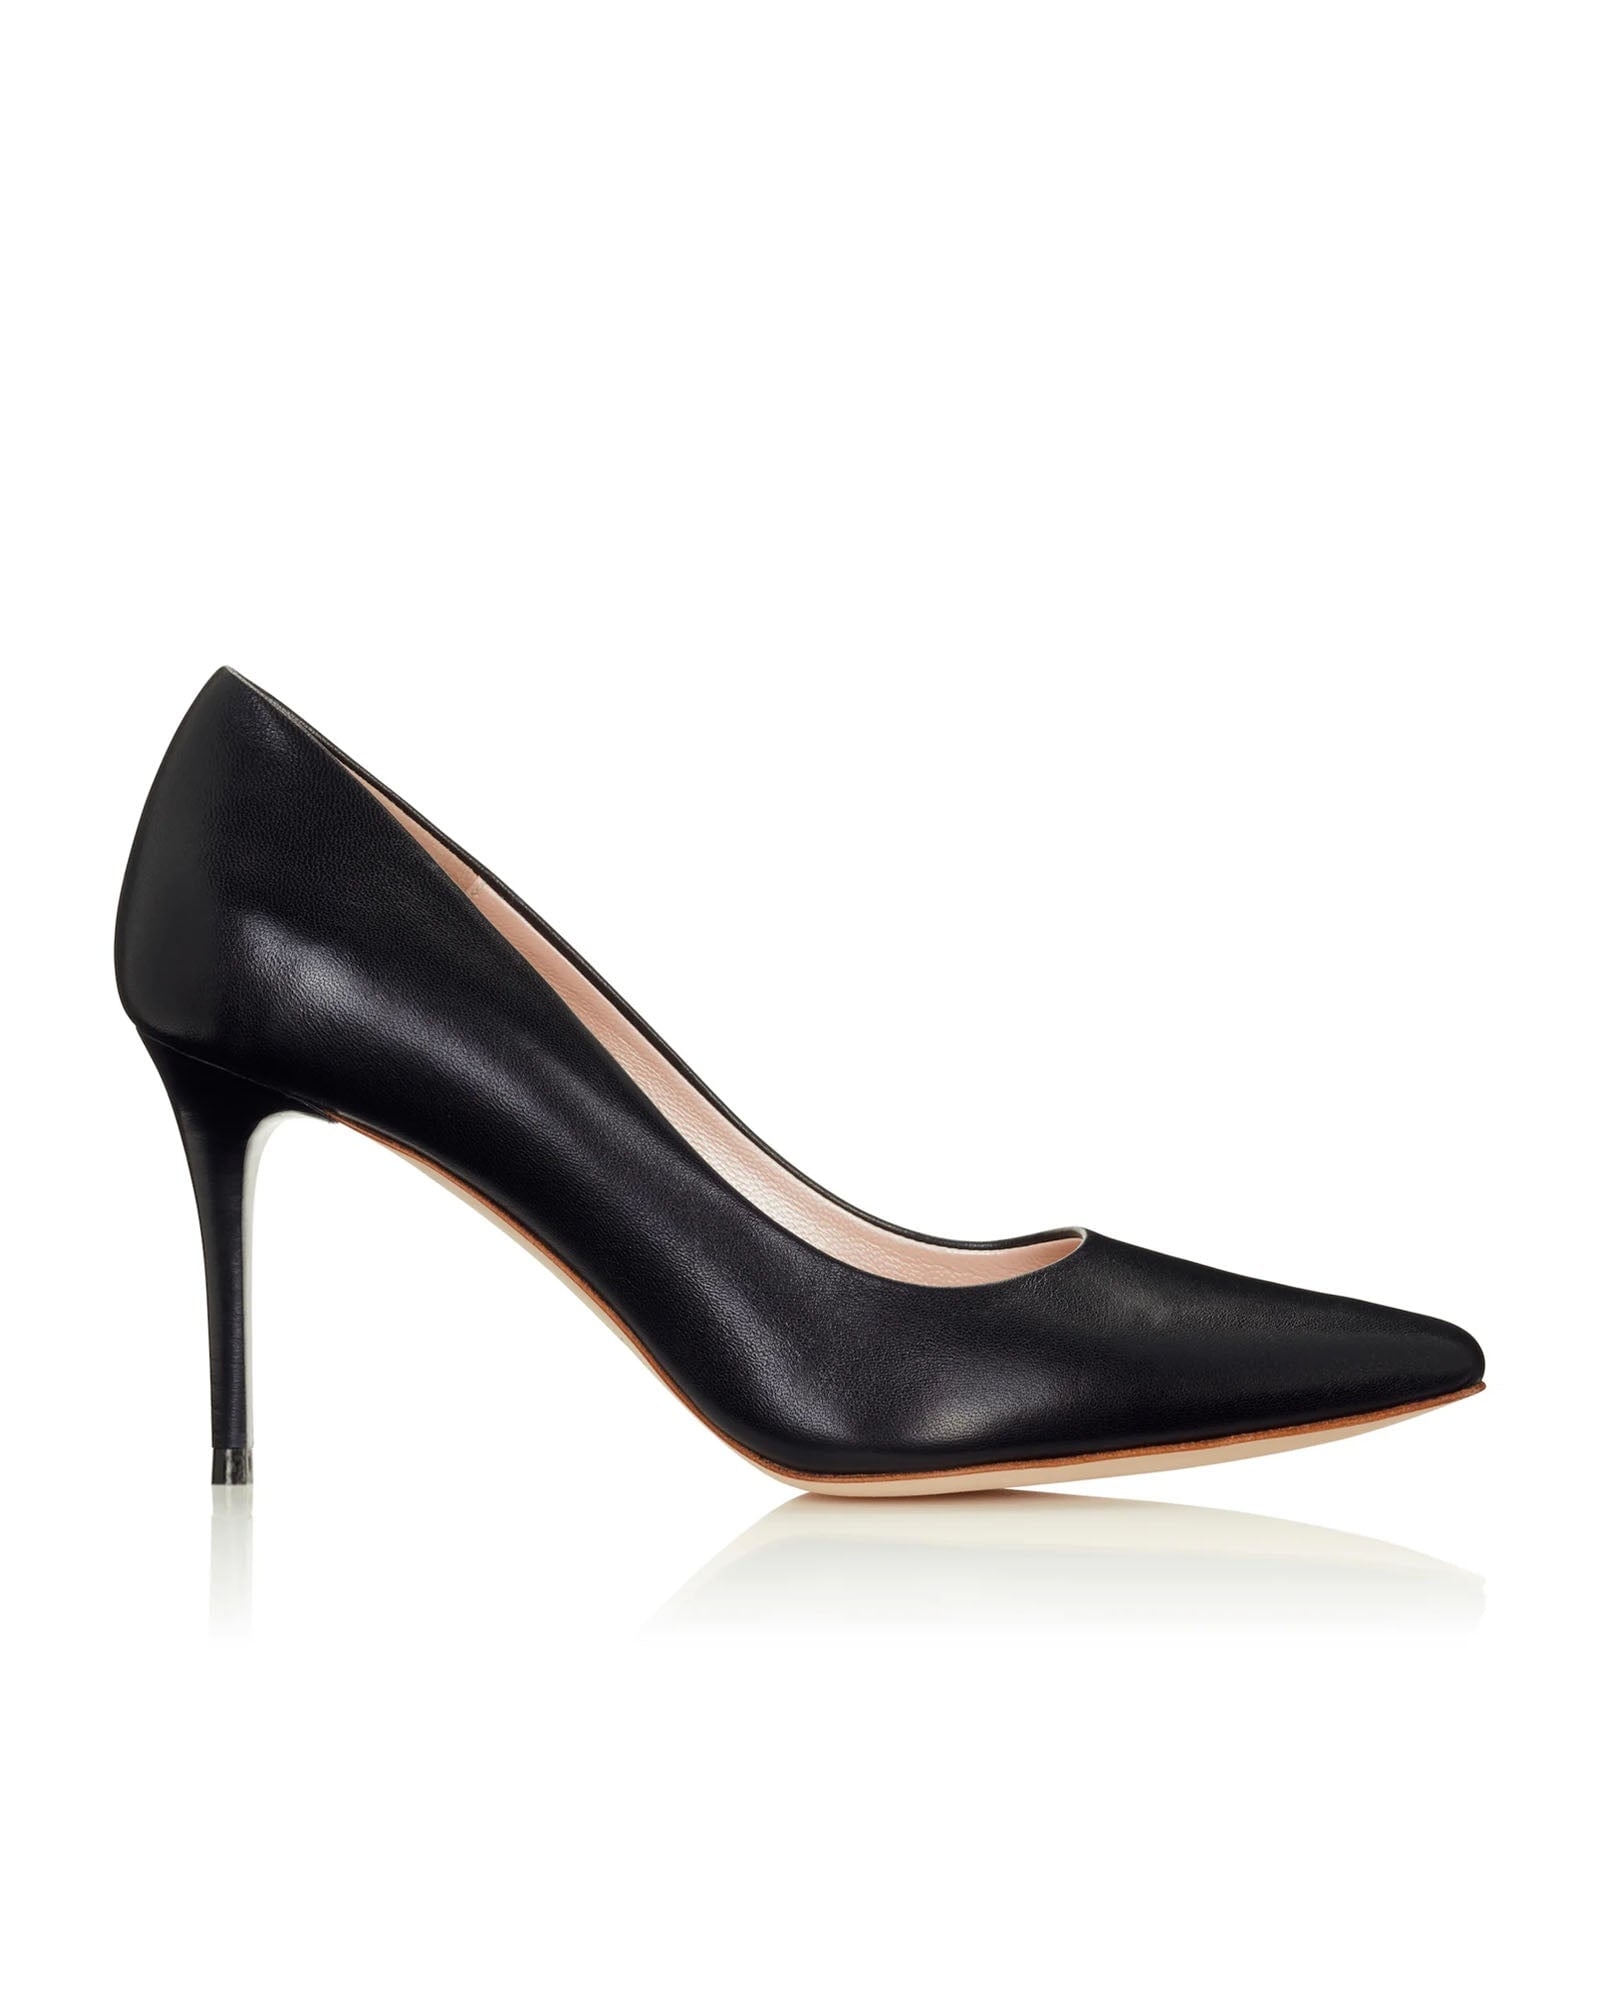 Claudia Black Leather Fashion Shoe Black Pointed Court Shoe  image